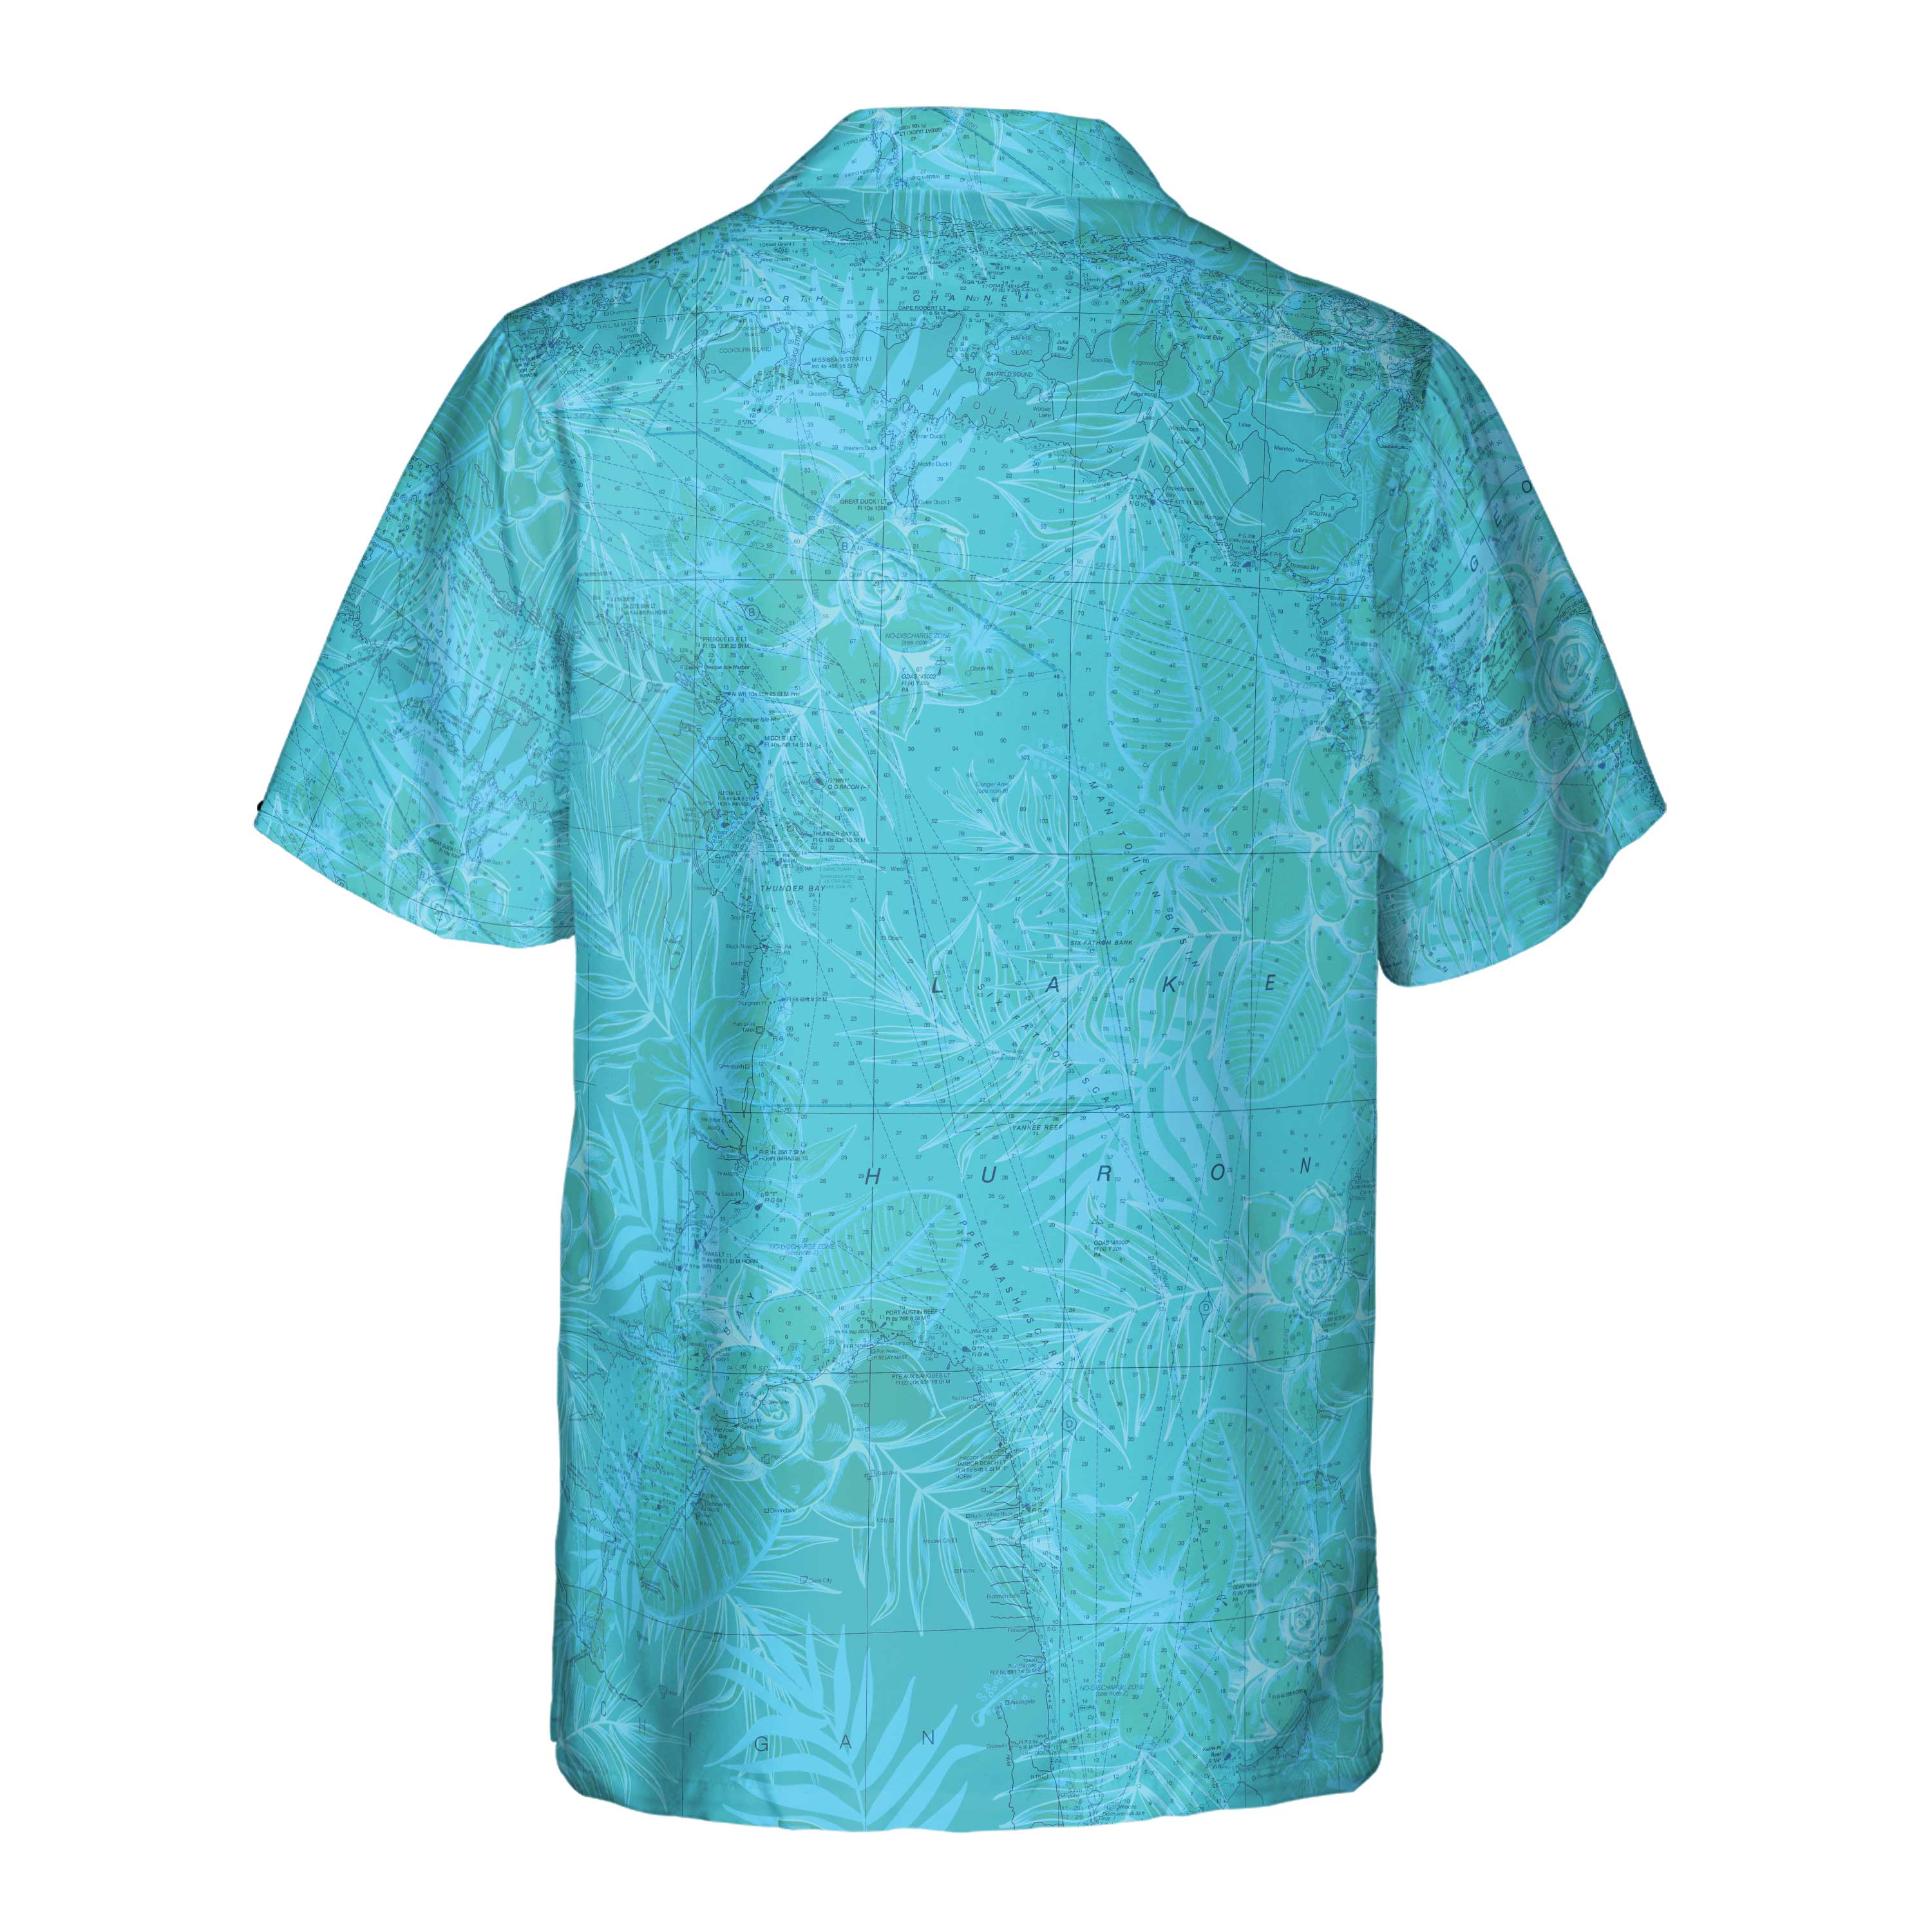 The Lake Huron and Georgian Bay Turquoise Pocket Shirt